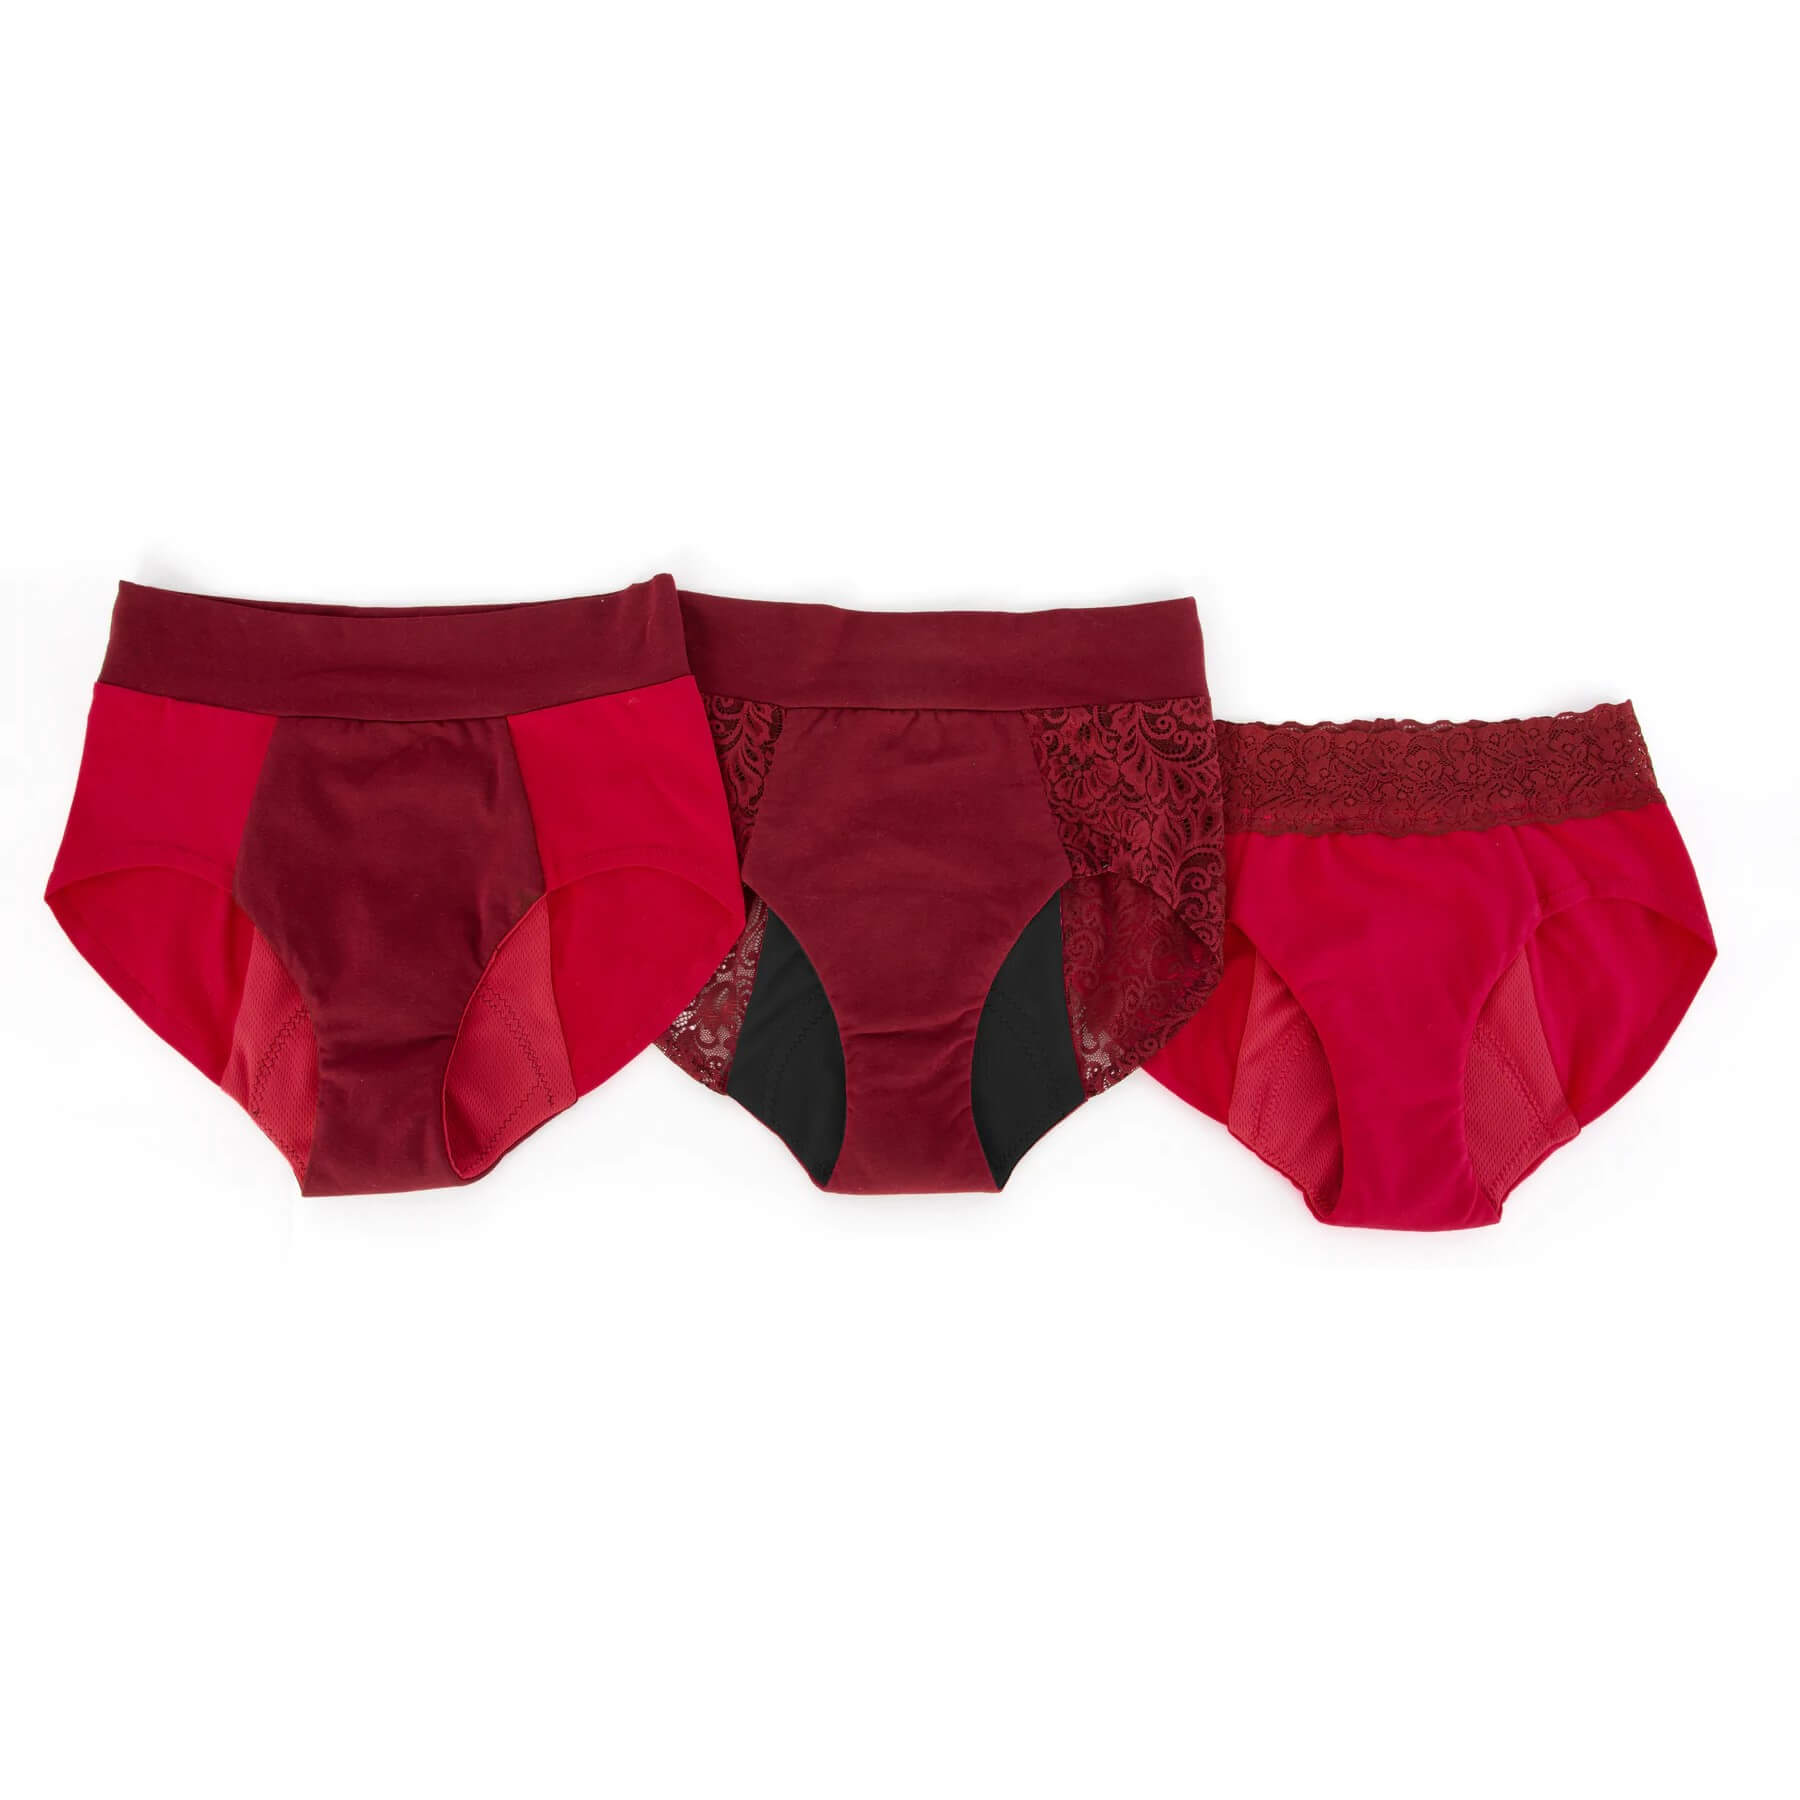 https://goodfabric.co.uk/wp-content/uploads/2023/01/good-fabric-jalie-sarah-period-underwear-sewing-pattern-trio.jpg